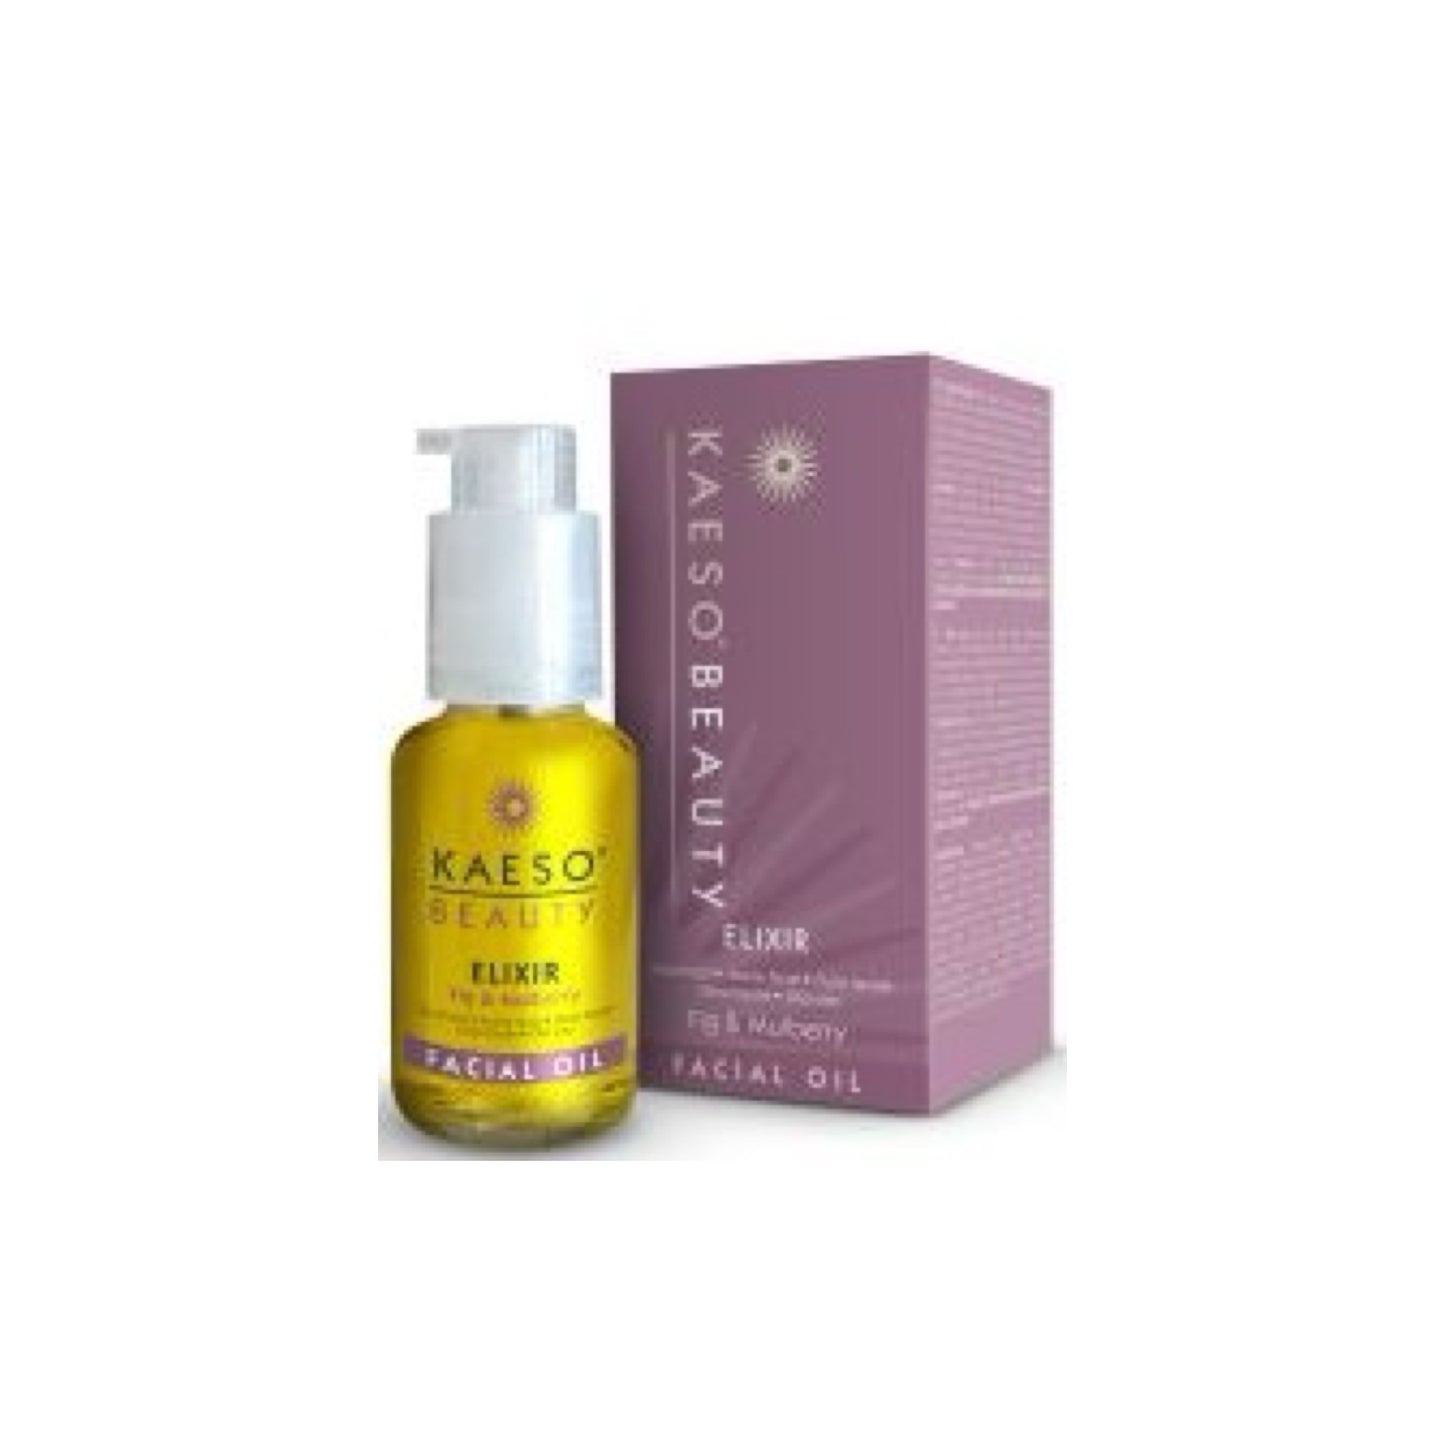 KAESO Elixir Facial Oil 50ml  (All Skin Types)